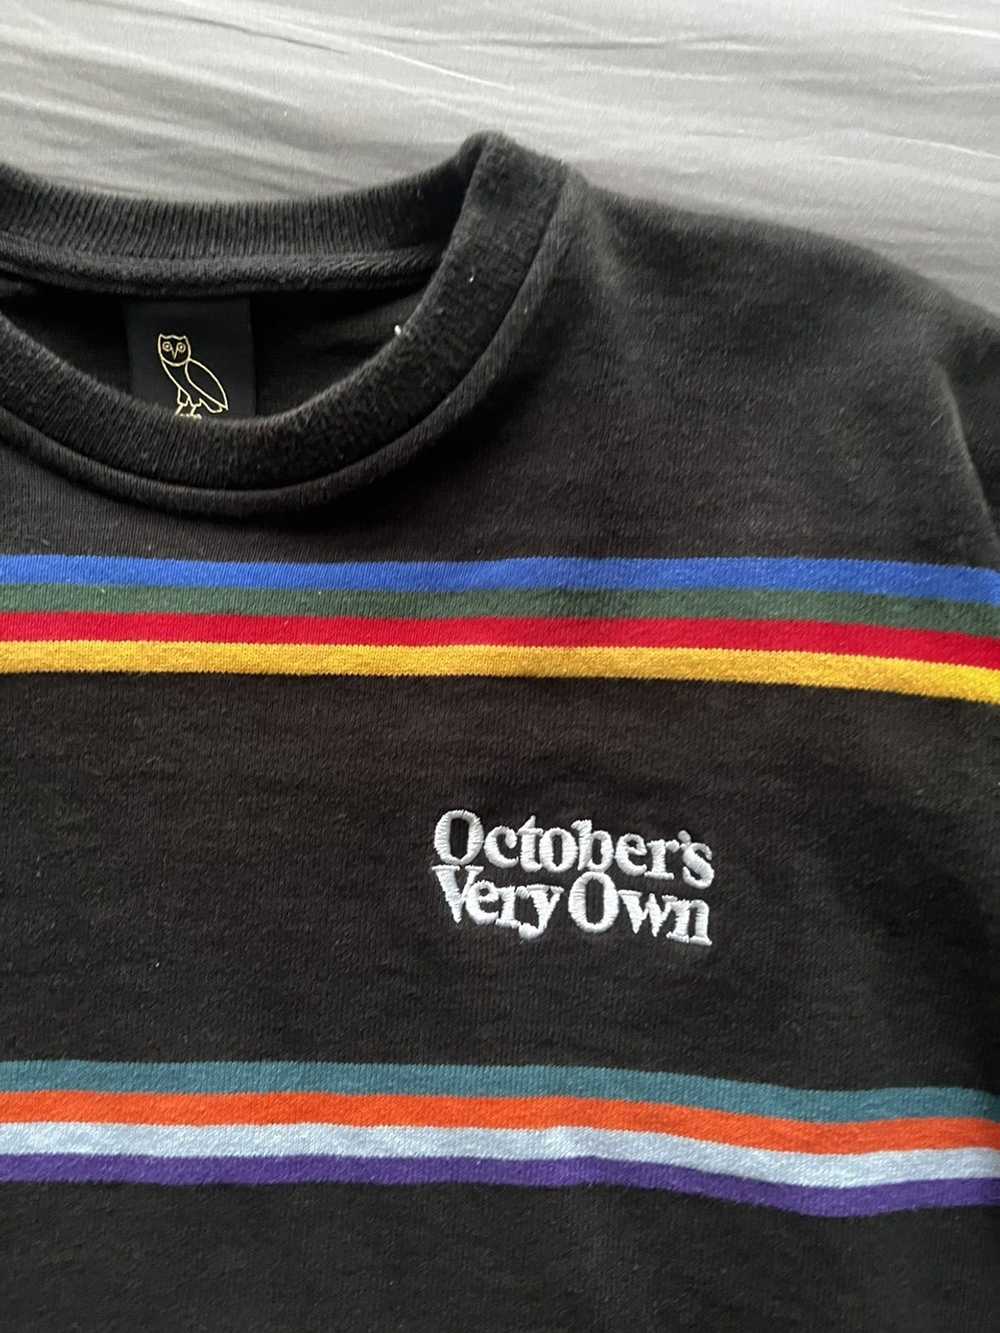 Octobers Very Own OVO rugby sweatshirt - image 2